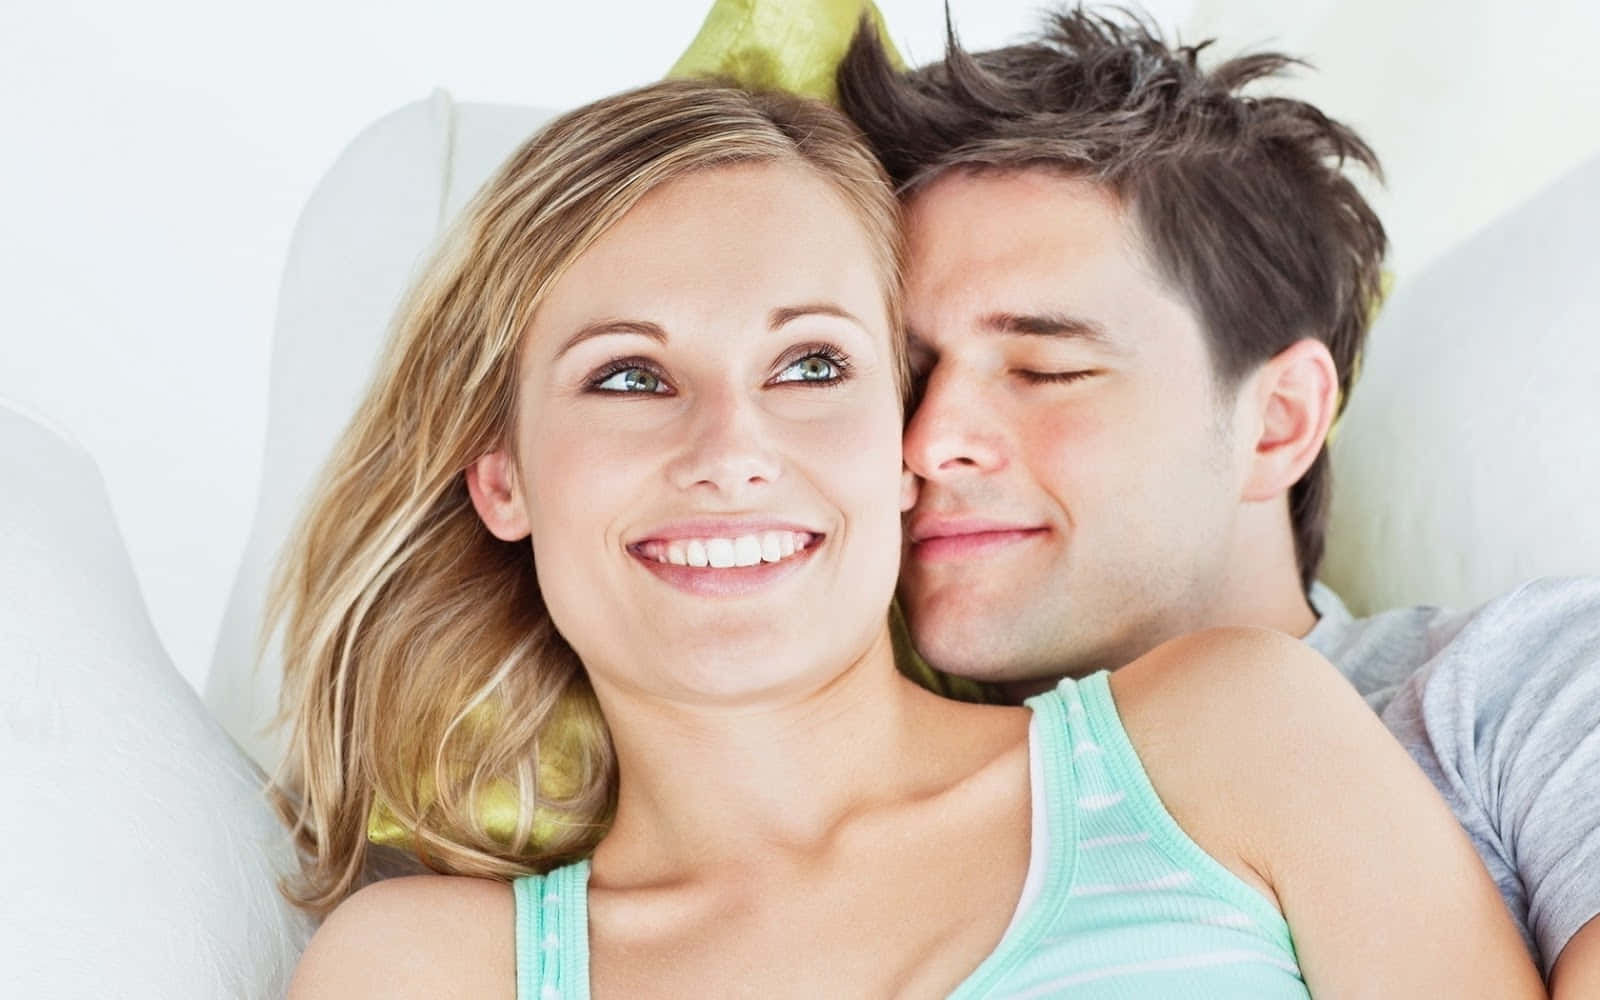 "Girlfriend And Boyfriend Celebrating Their Love" Wallpaper